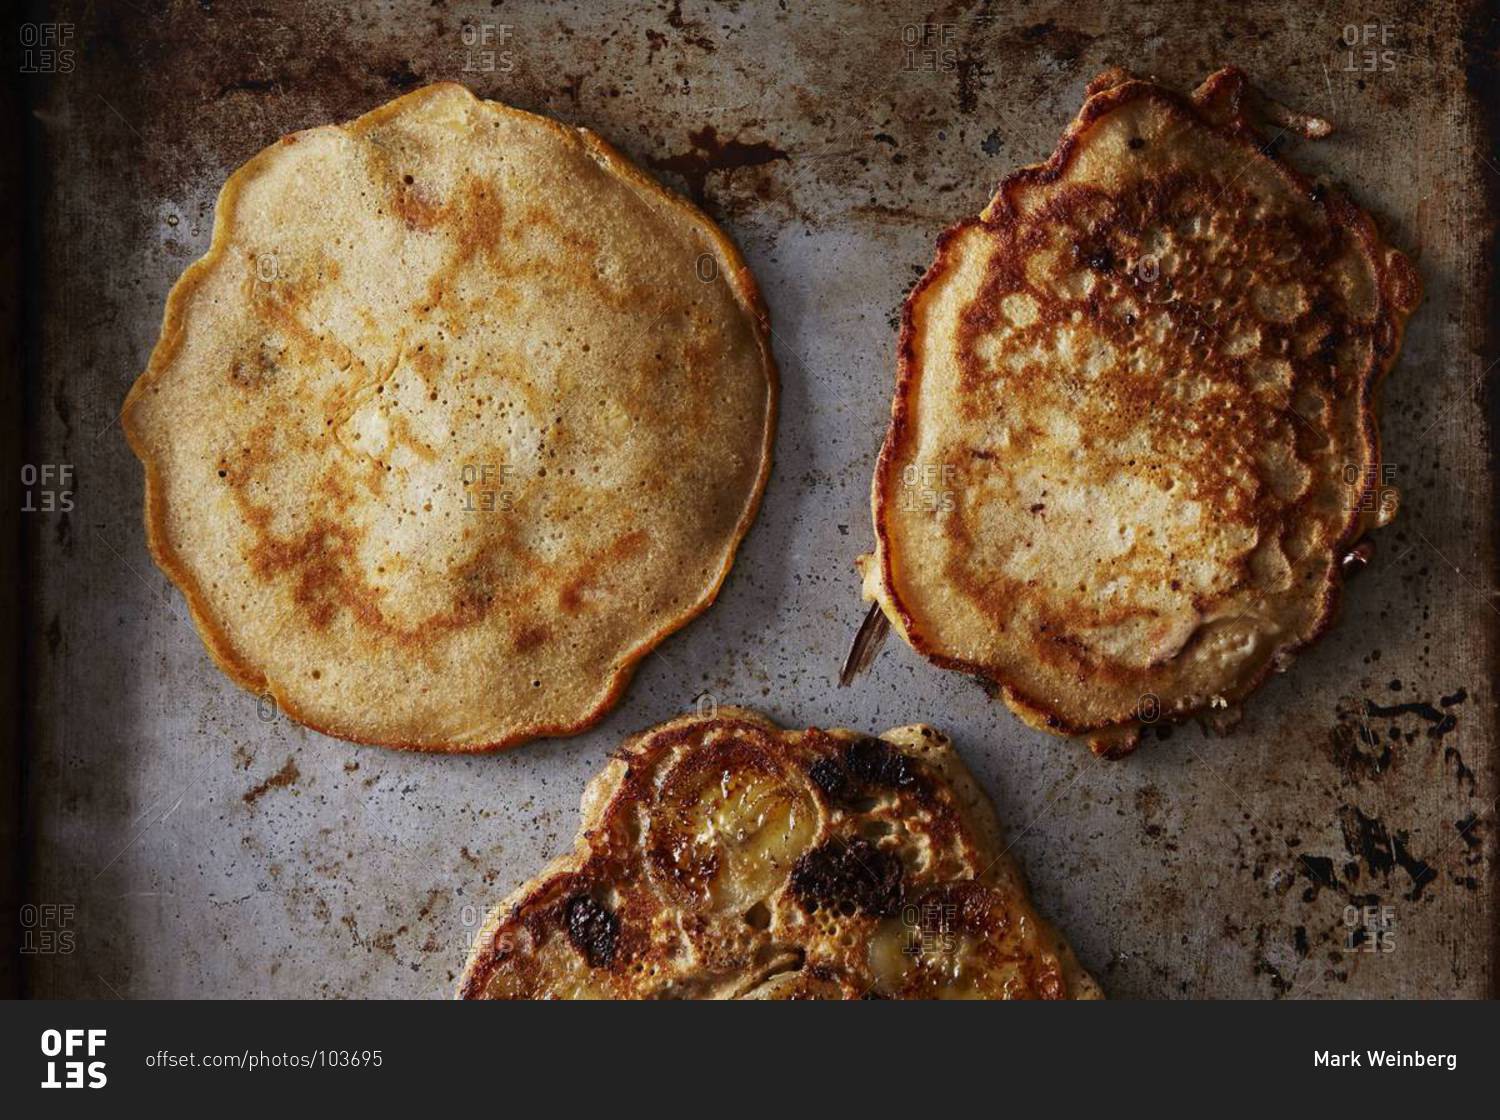 Three cooked pancakes, including one banana pancake